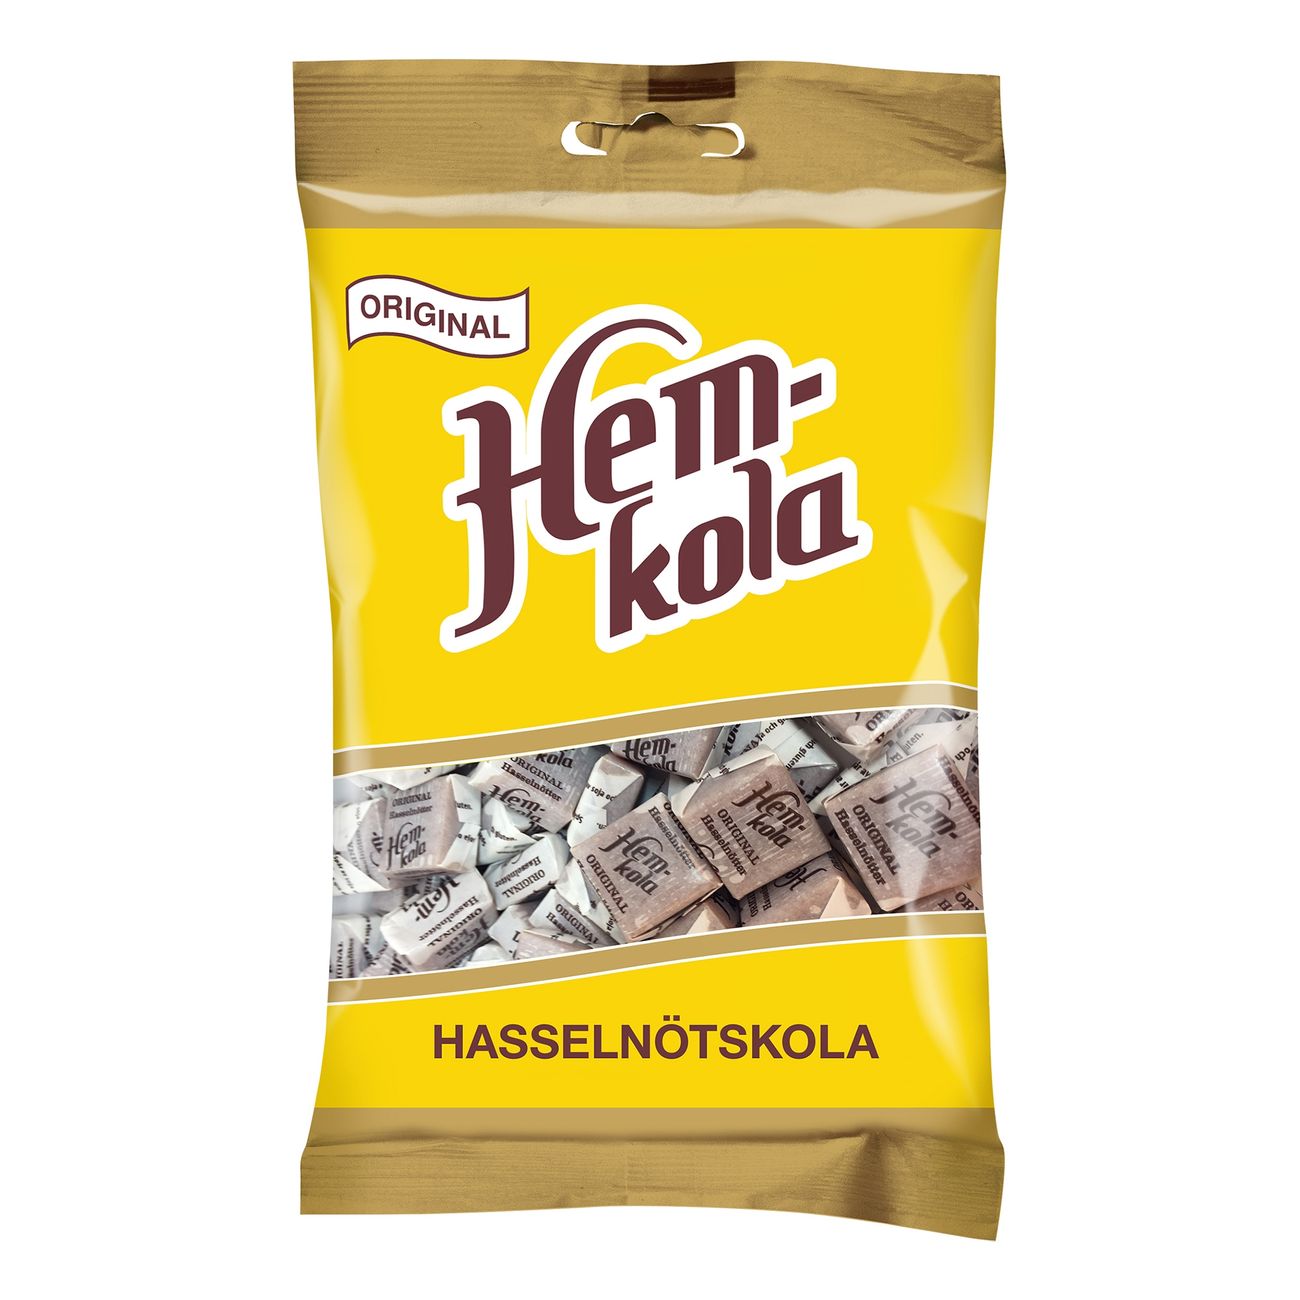 hemkola-hasselnot-89830-1